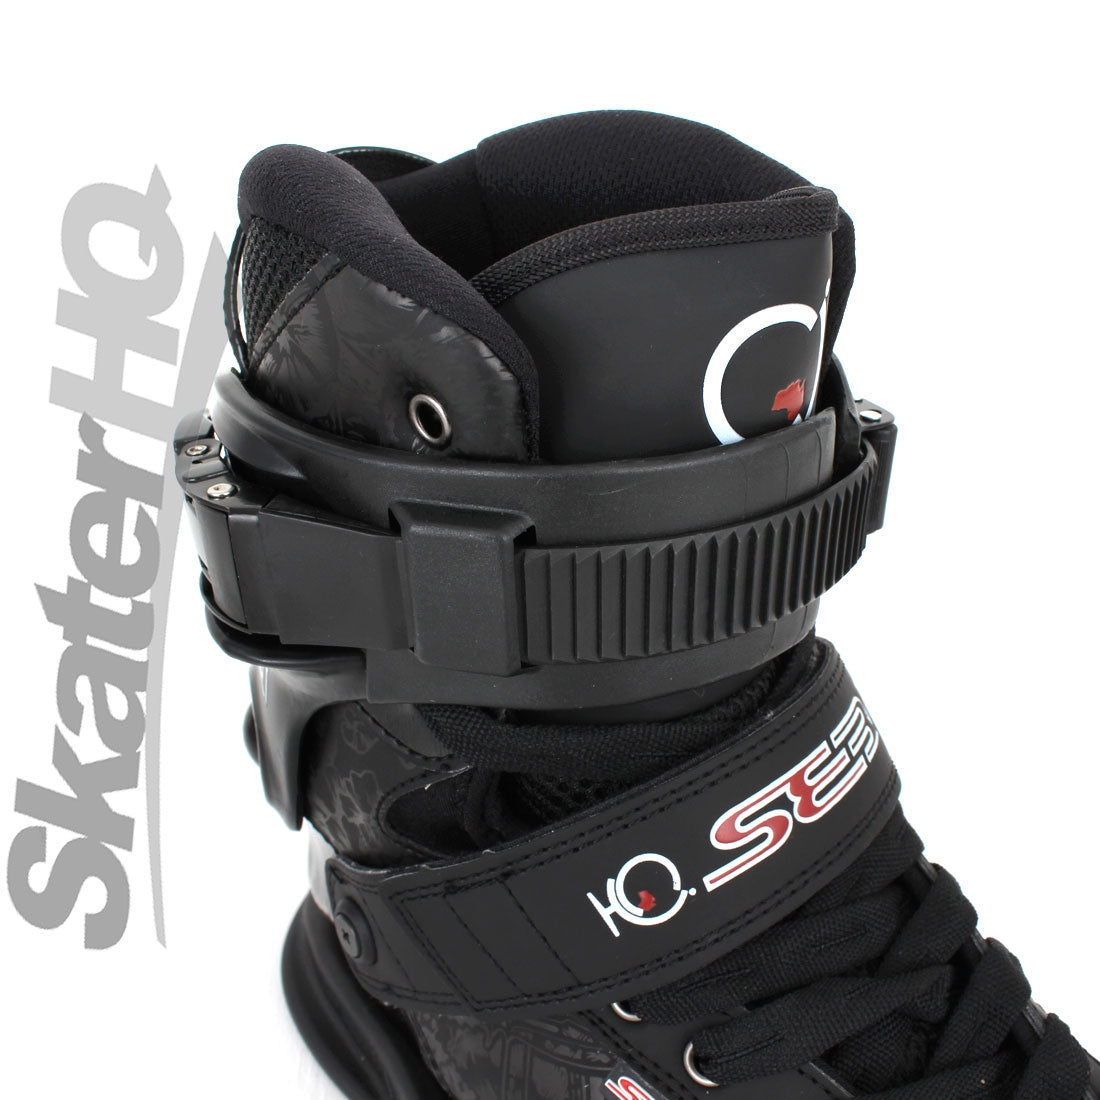 SEBA CJ Pro Skate Carbon BOOT 8US/EU41 Inline Aggressive Skates